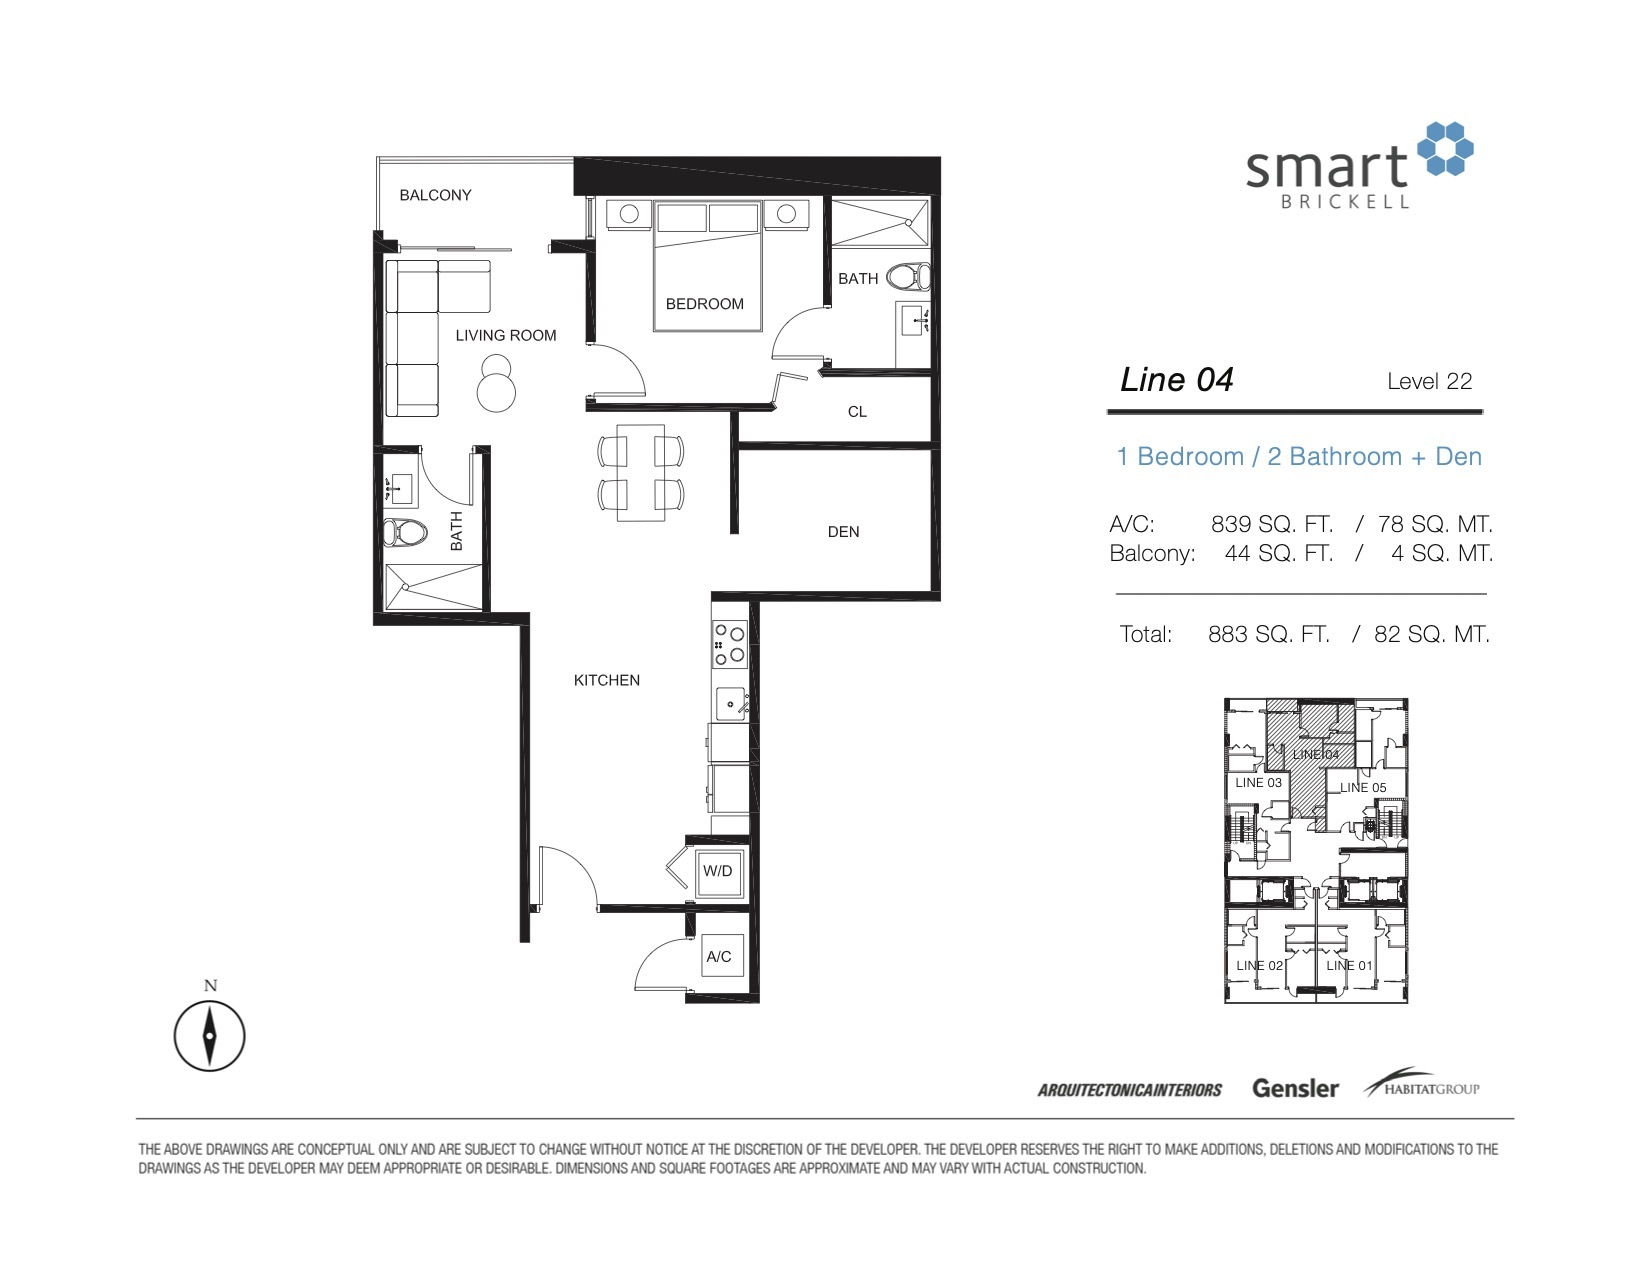 Floor Plan for Smart Brickell Floorplans, Line 04 Level 22